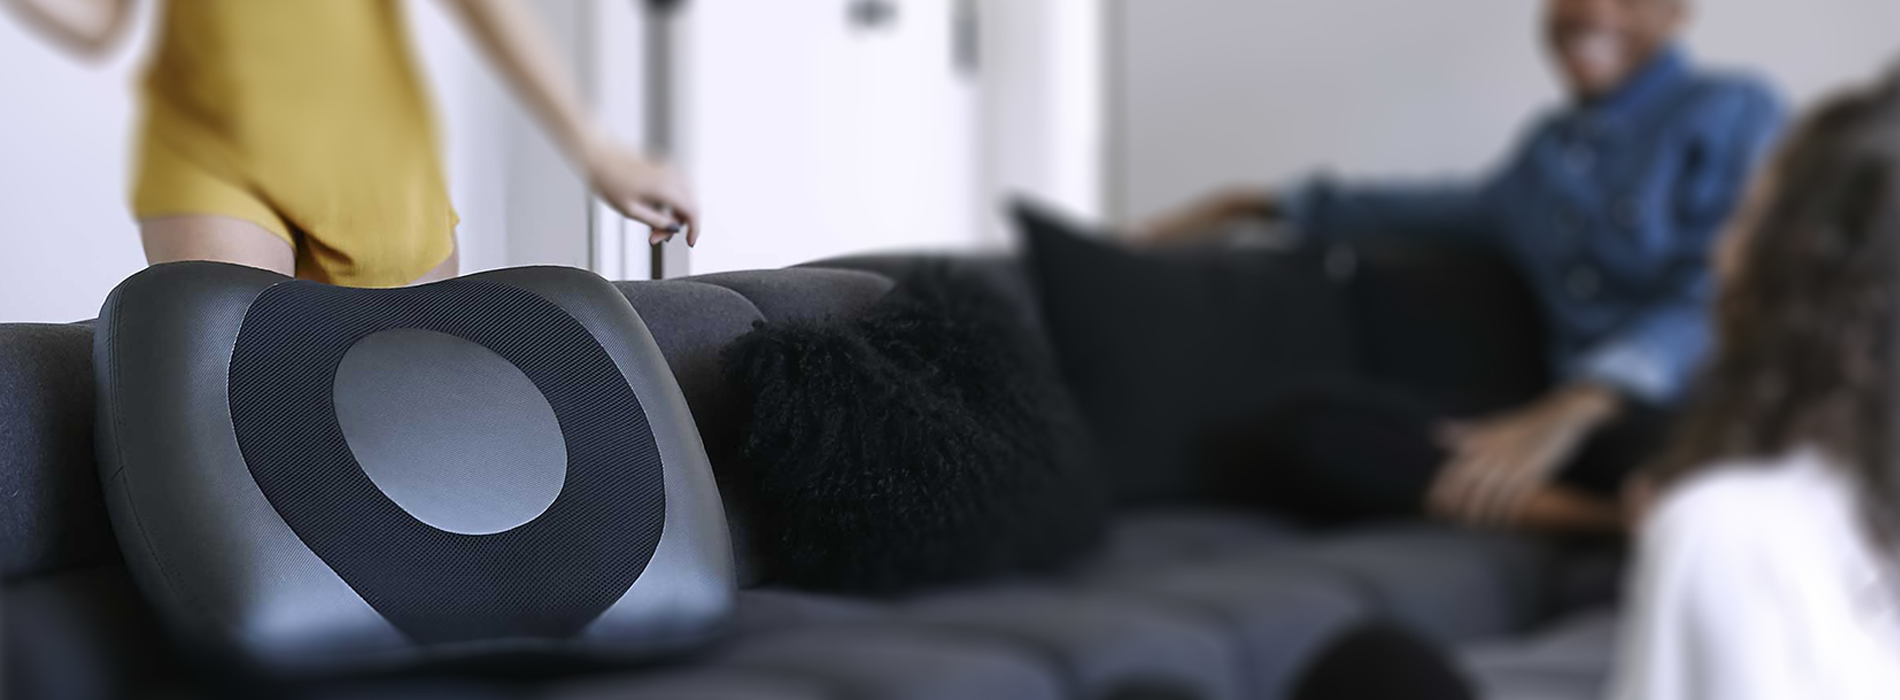 comfort revolution kushion bluetooth speaker pillow